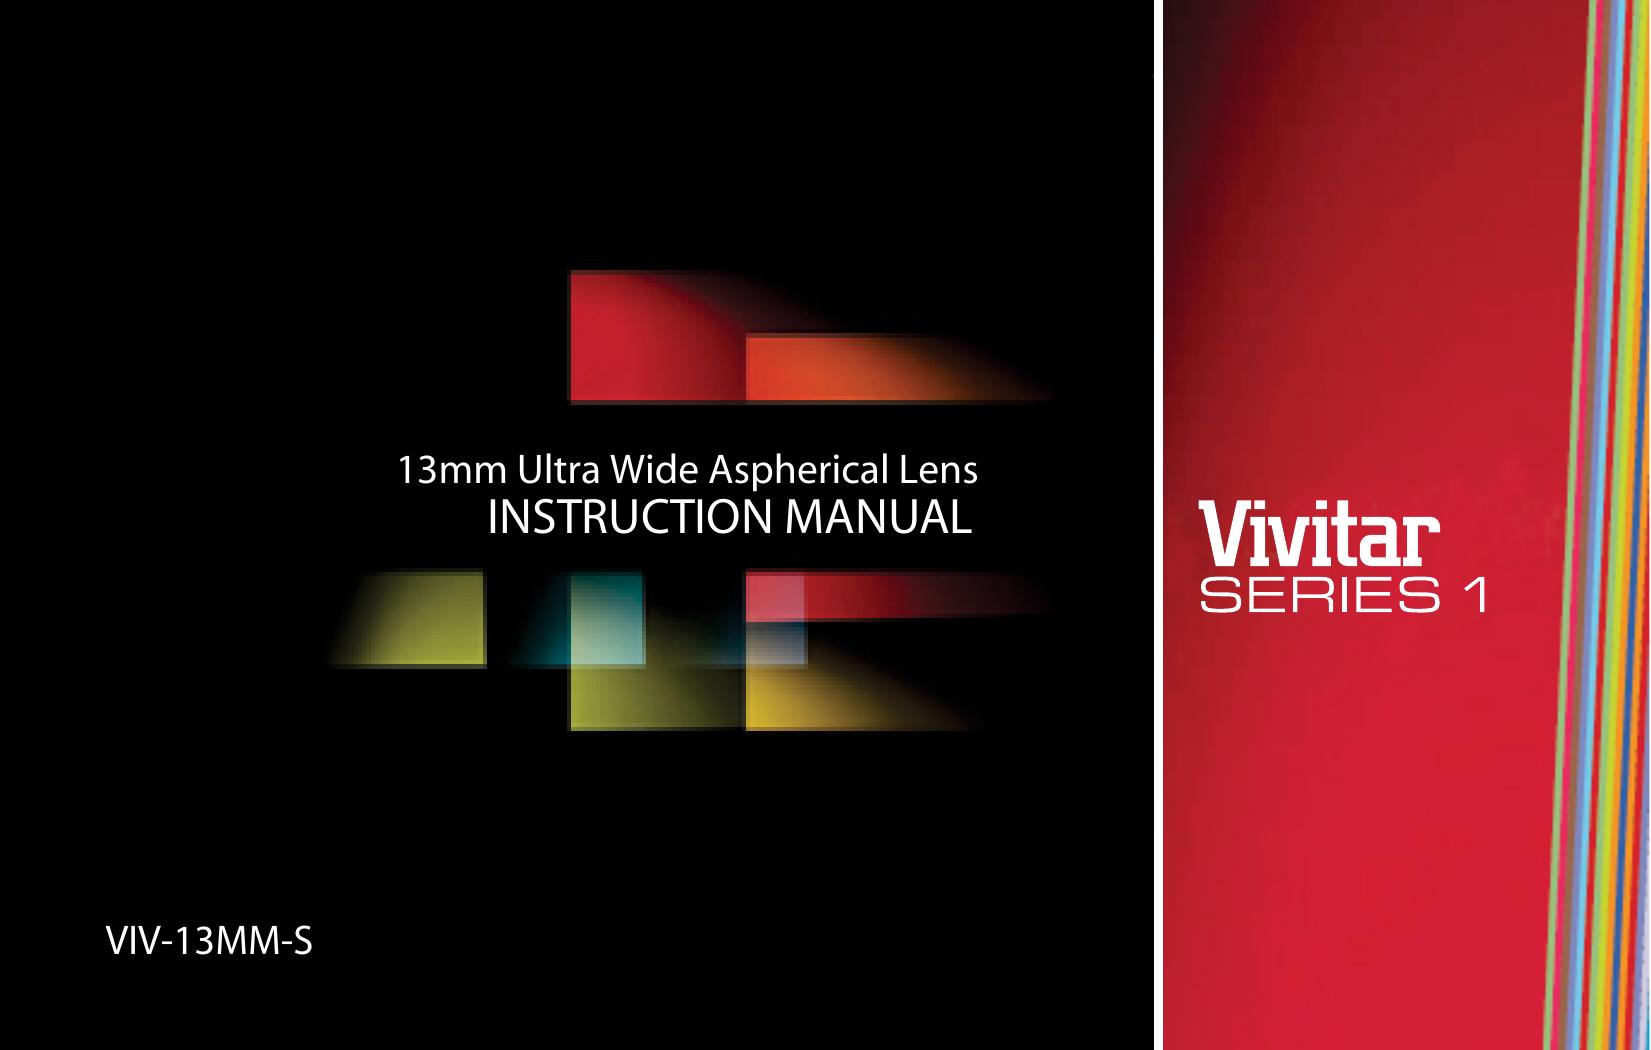 Vivitar VIV-13MM-S Camera Lens User Manual